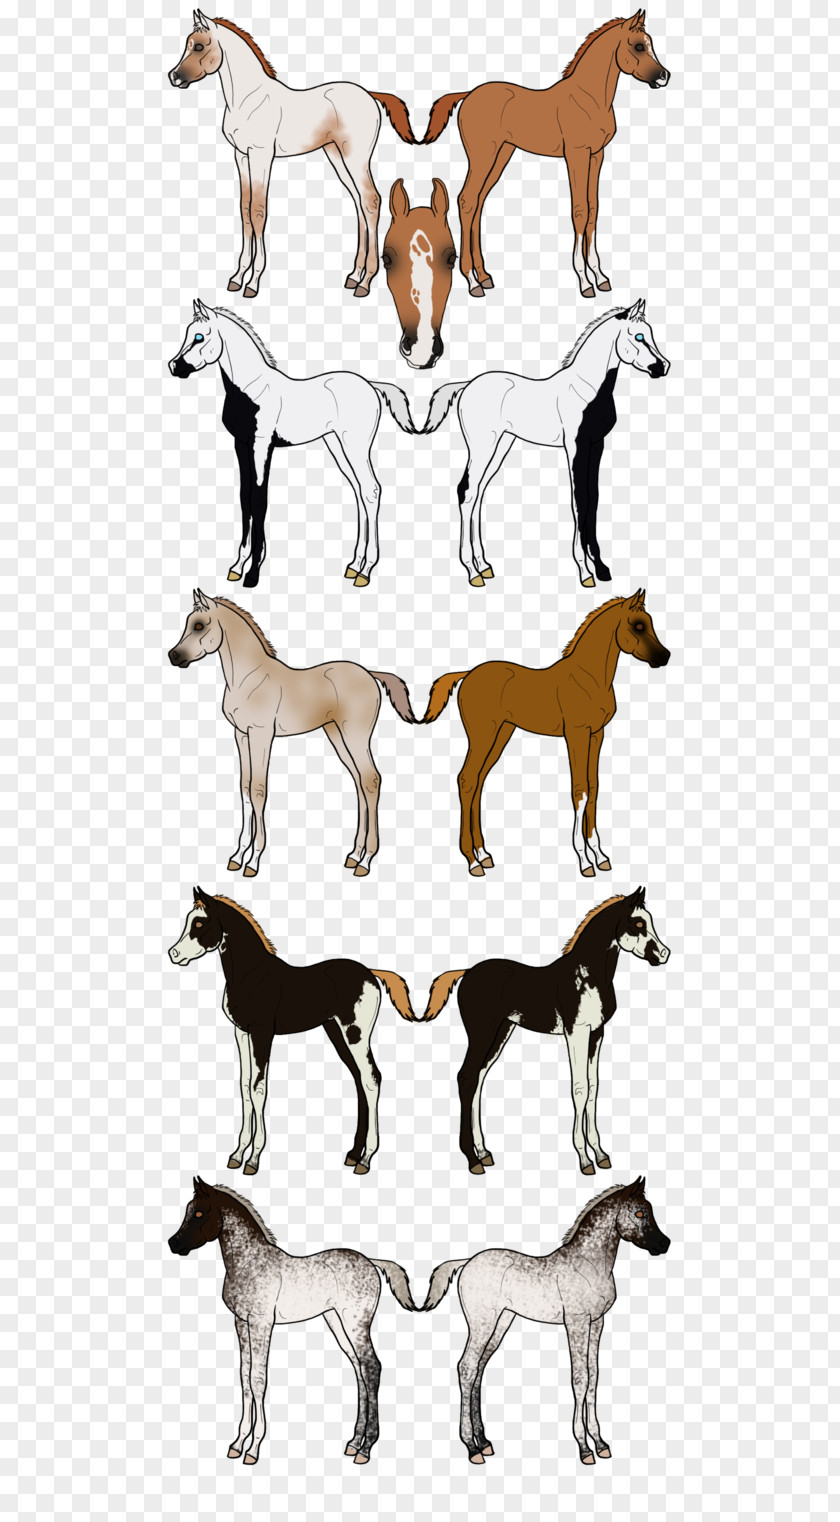 Arabian Horse Mustang Cattle Goat Pack Animal Deer PNG